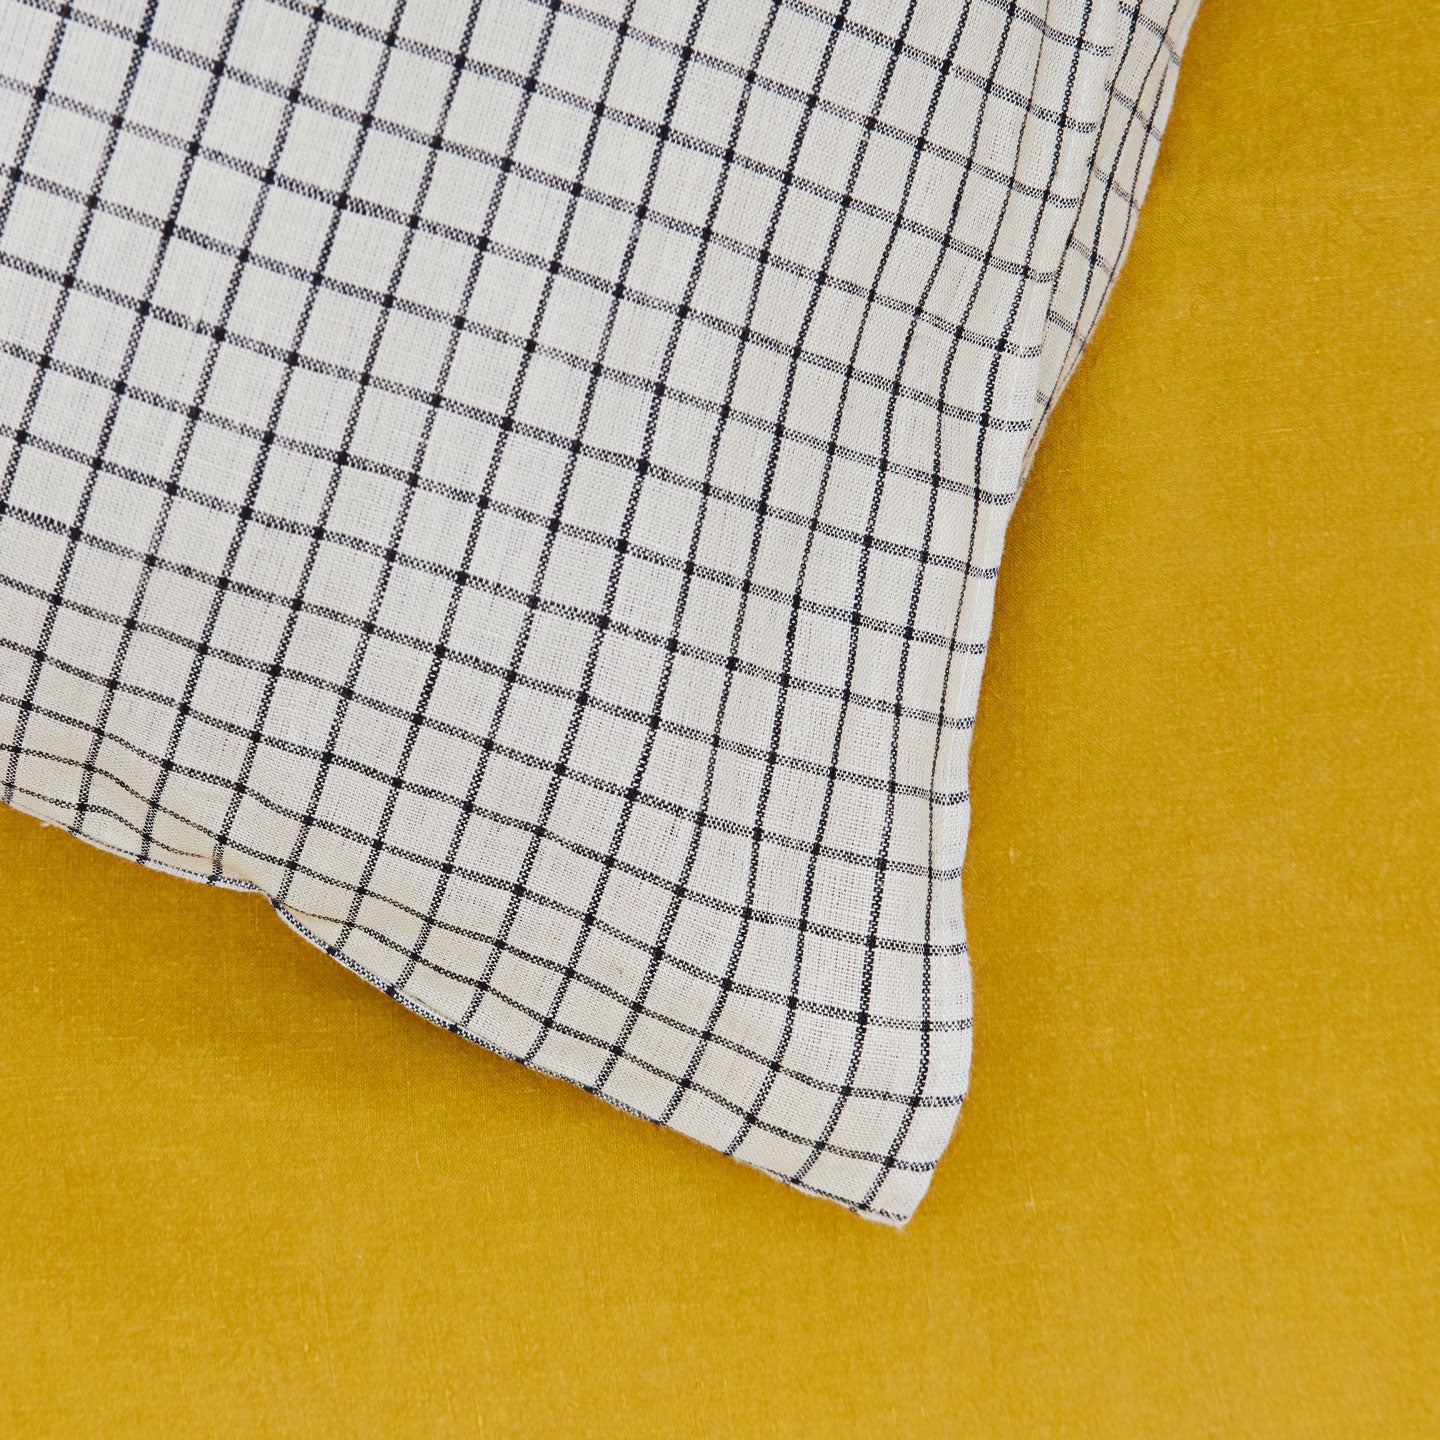 A close up of a checked linen pillow case on a mustard sheet.